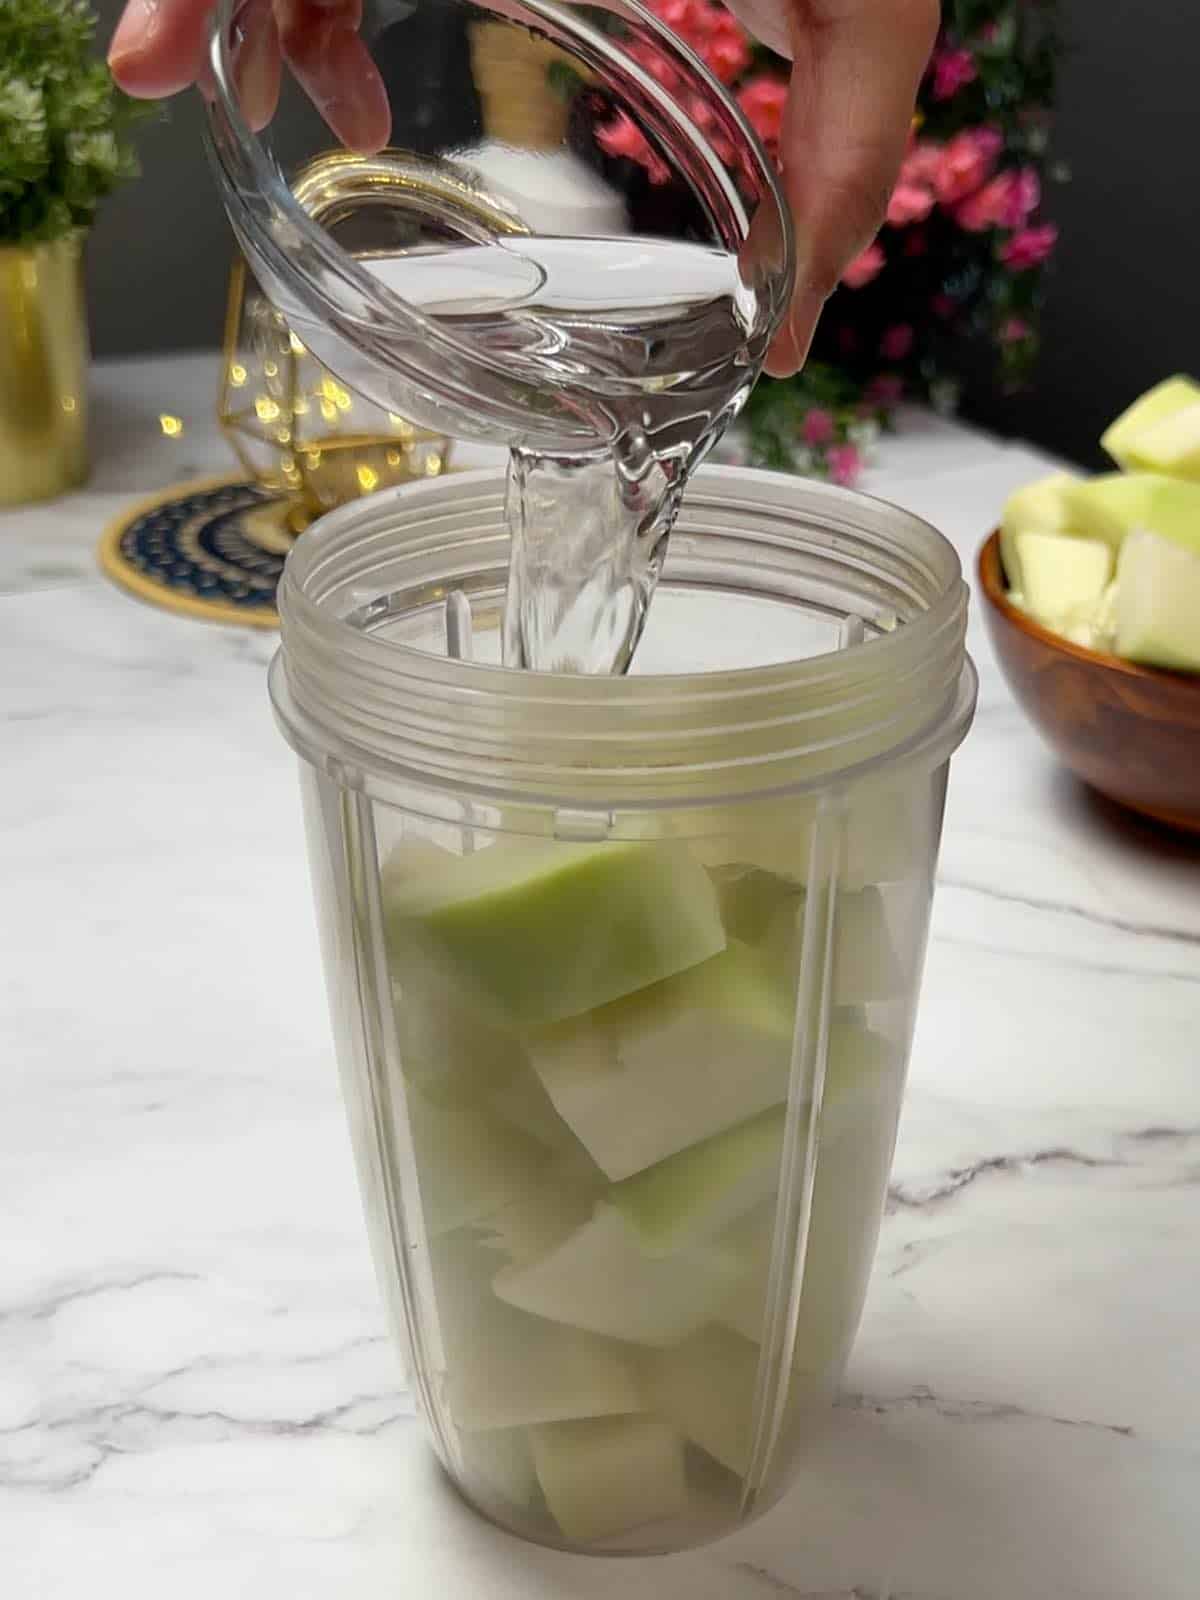 adding vinegar to green papaya cubes that are in a blender jar